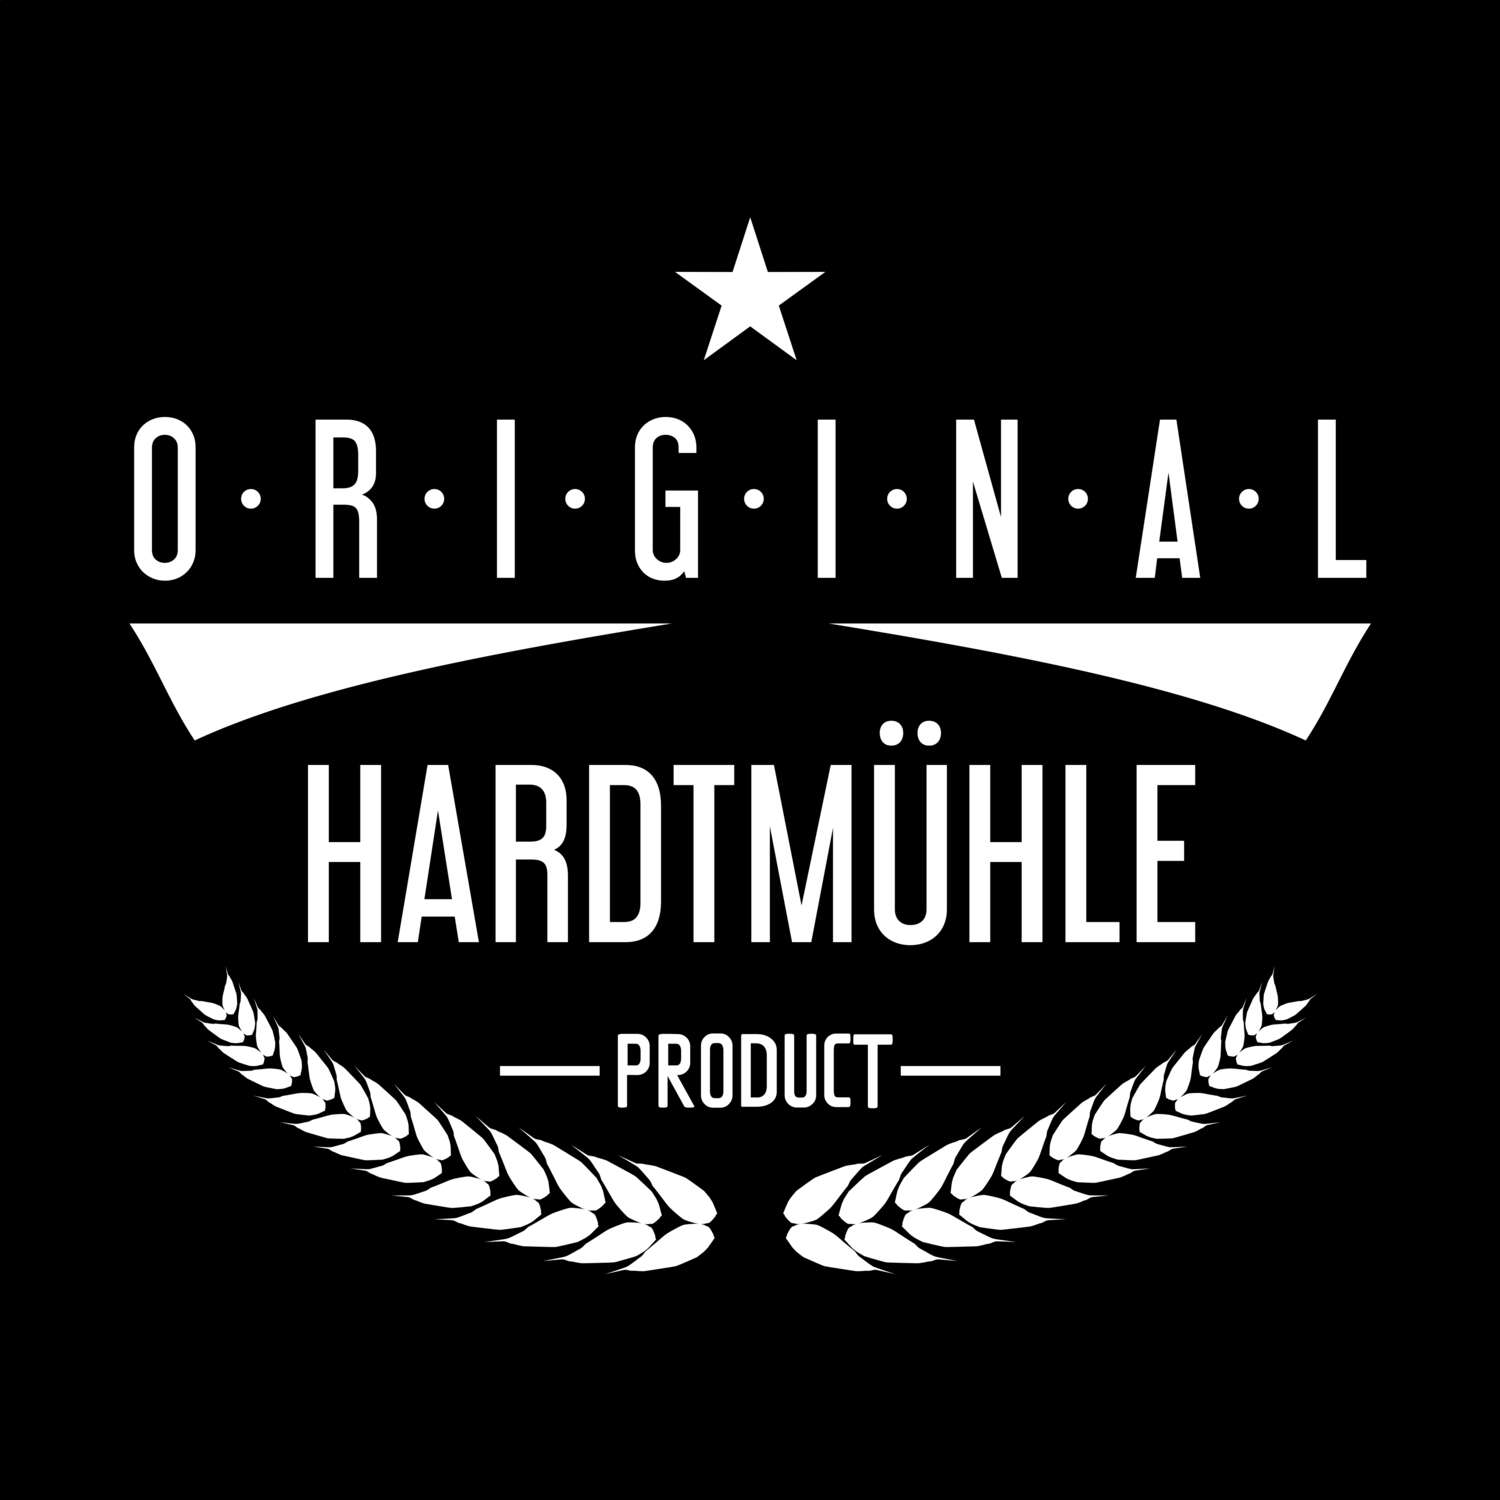 Hardtmühle T-Shirt »Original Product«